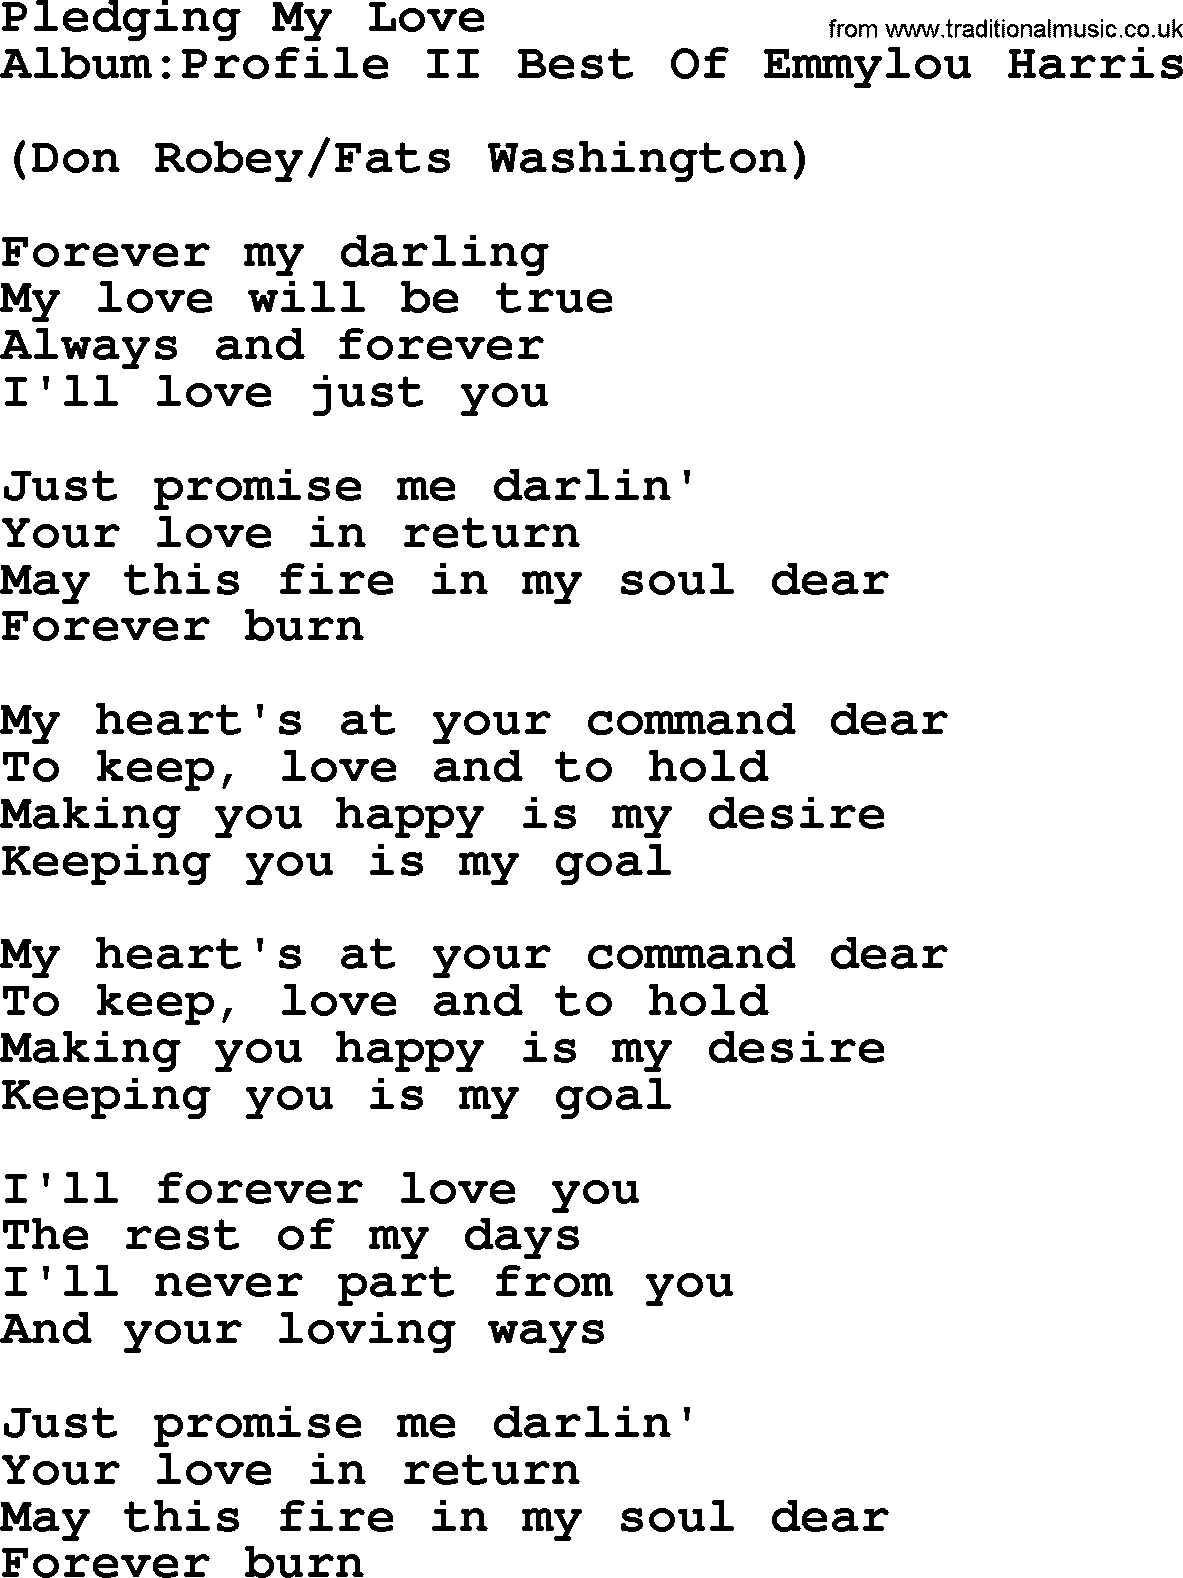 Emmylou Harris song: Pledging My Love lyrics